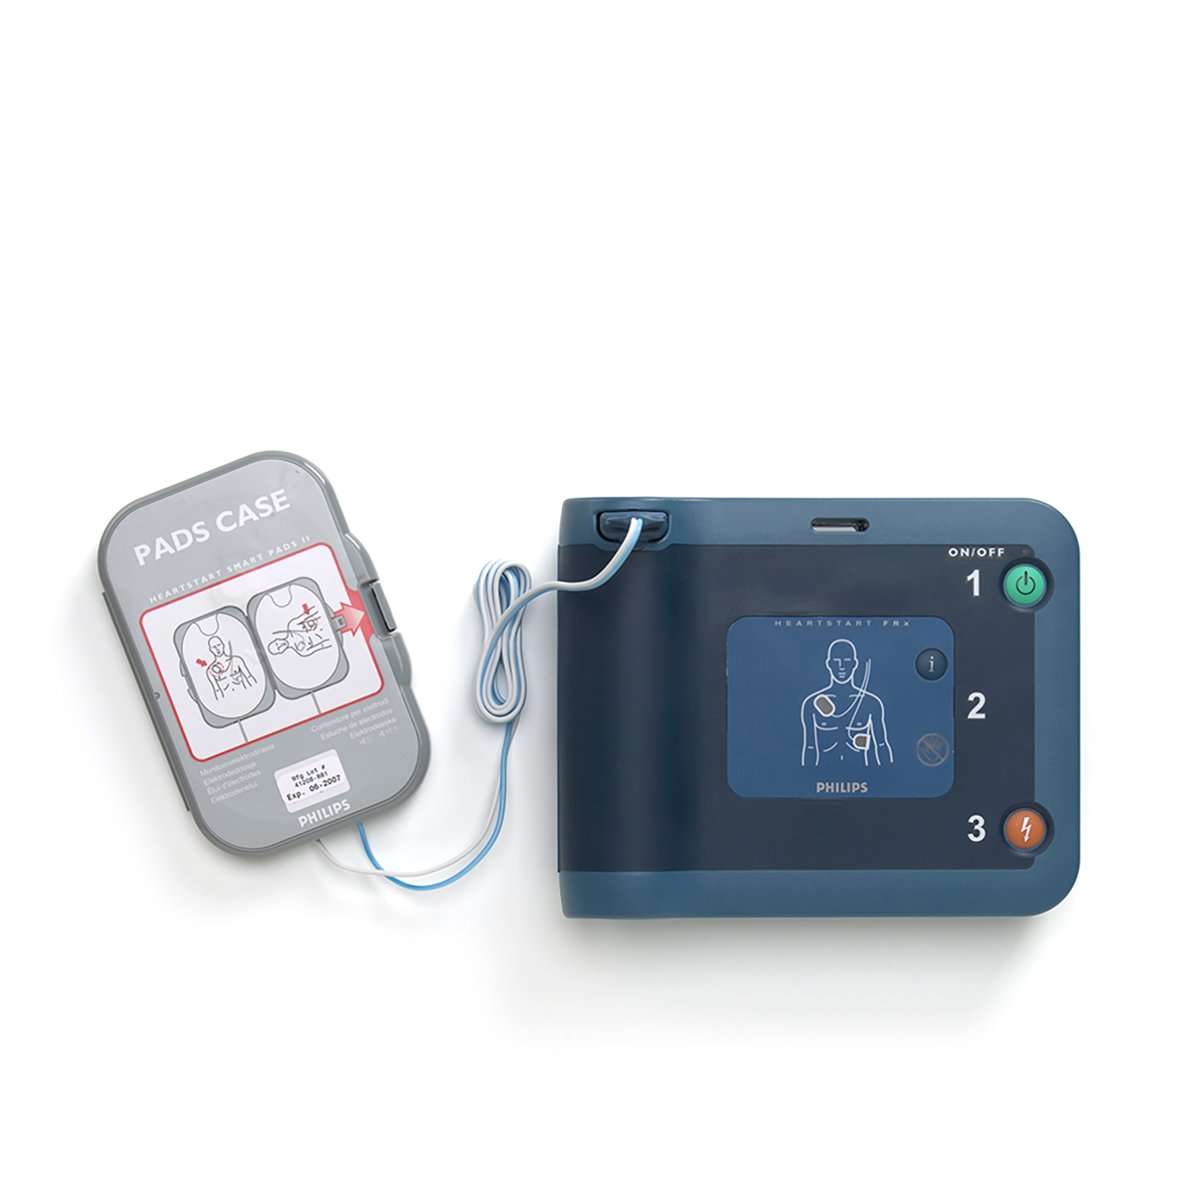 Philips HeartStart FRx Semi-Automatic Defibrillator with Carry Case